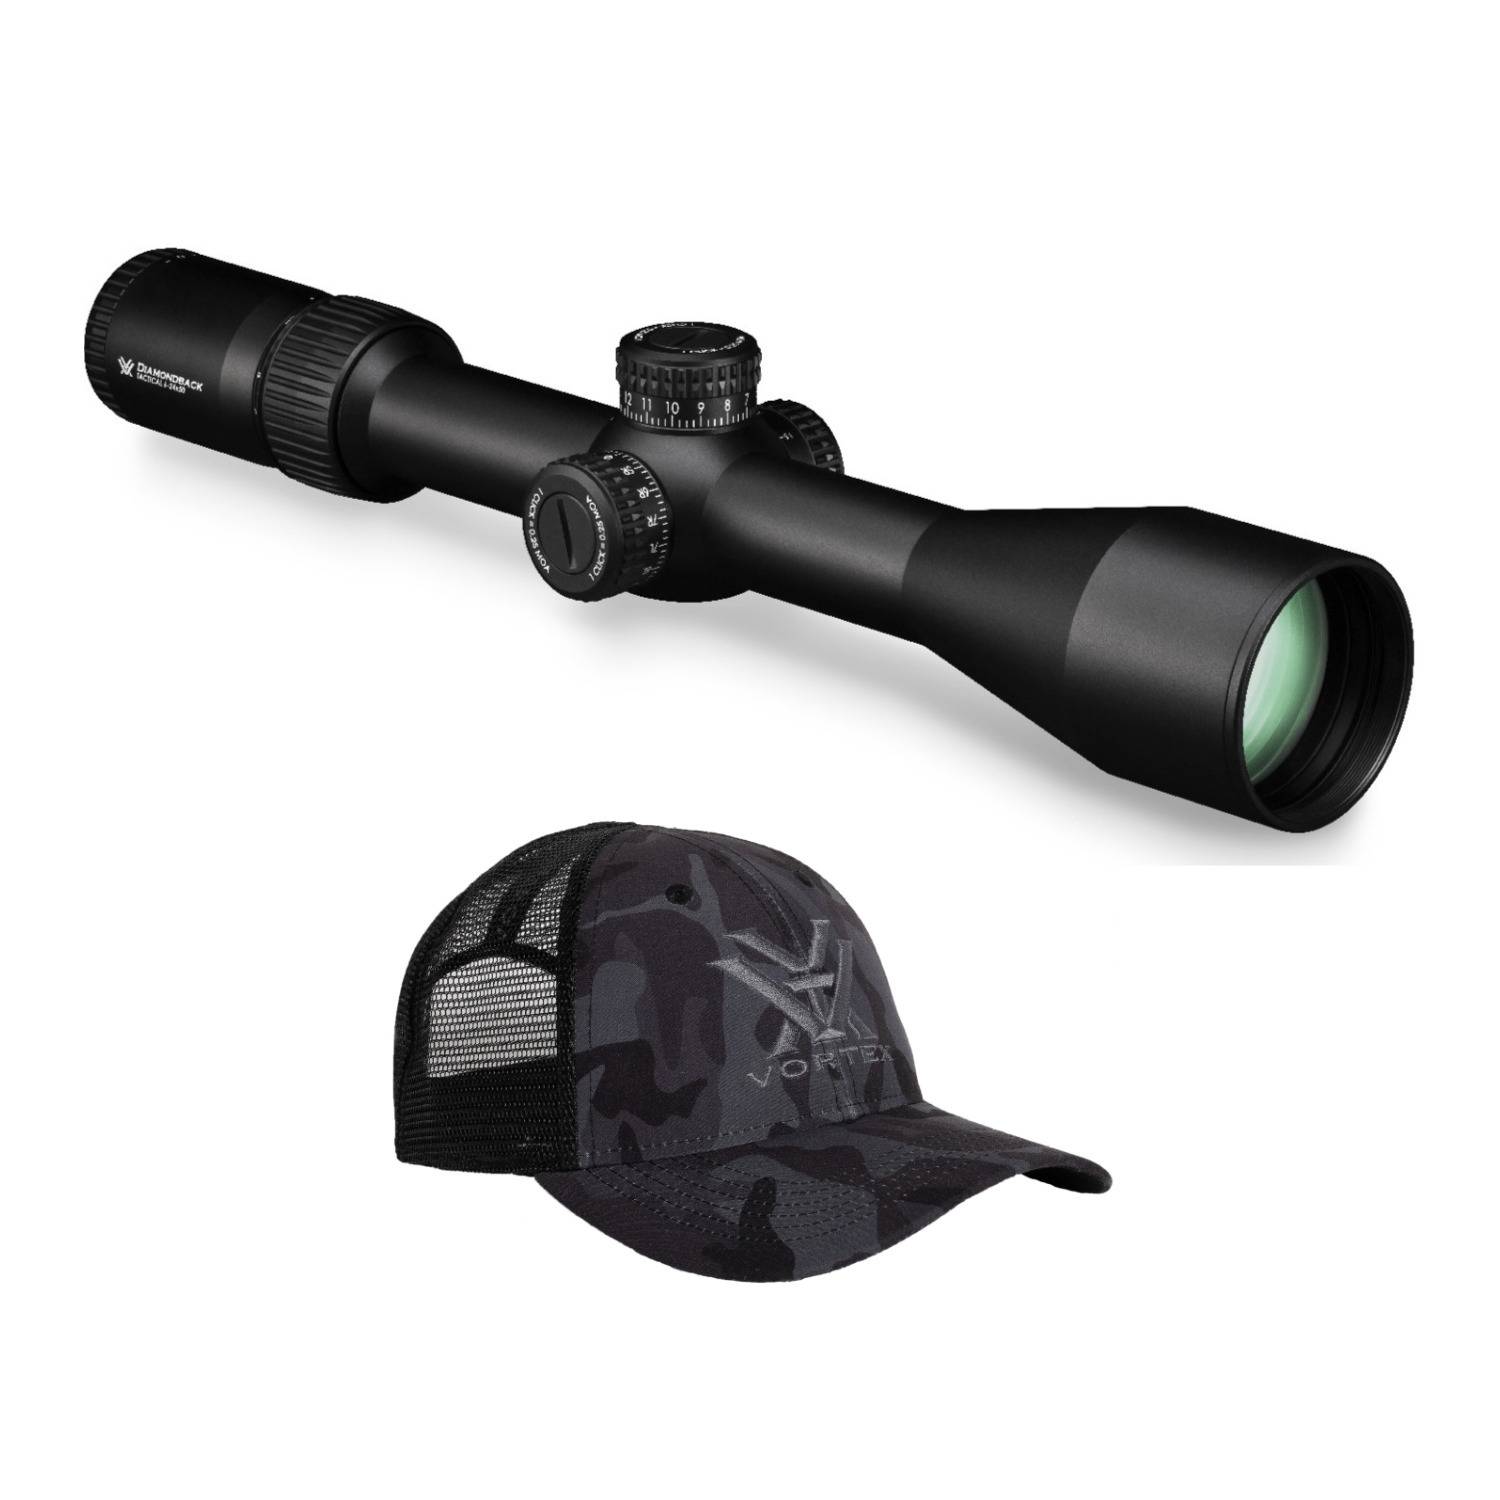 Vortex Diamondback Tactical 6-24x50 Riflescope (EBR-2C MOA Reticle) and Hat